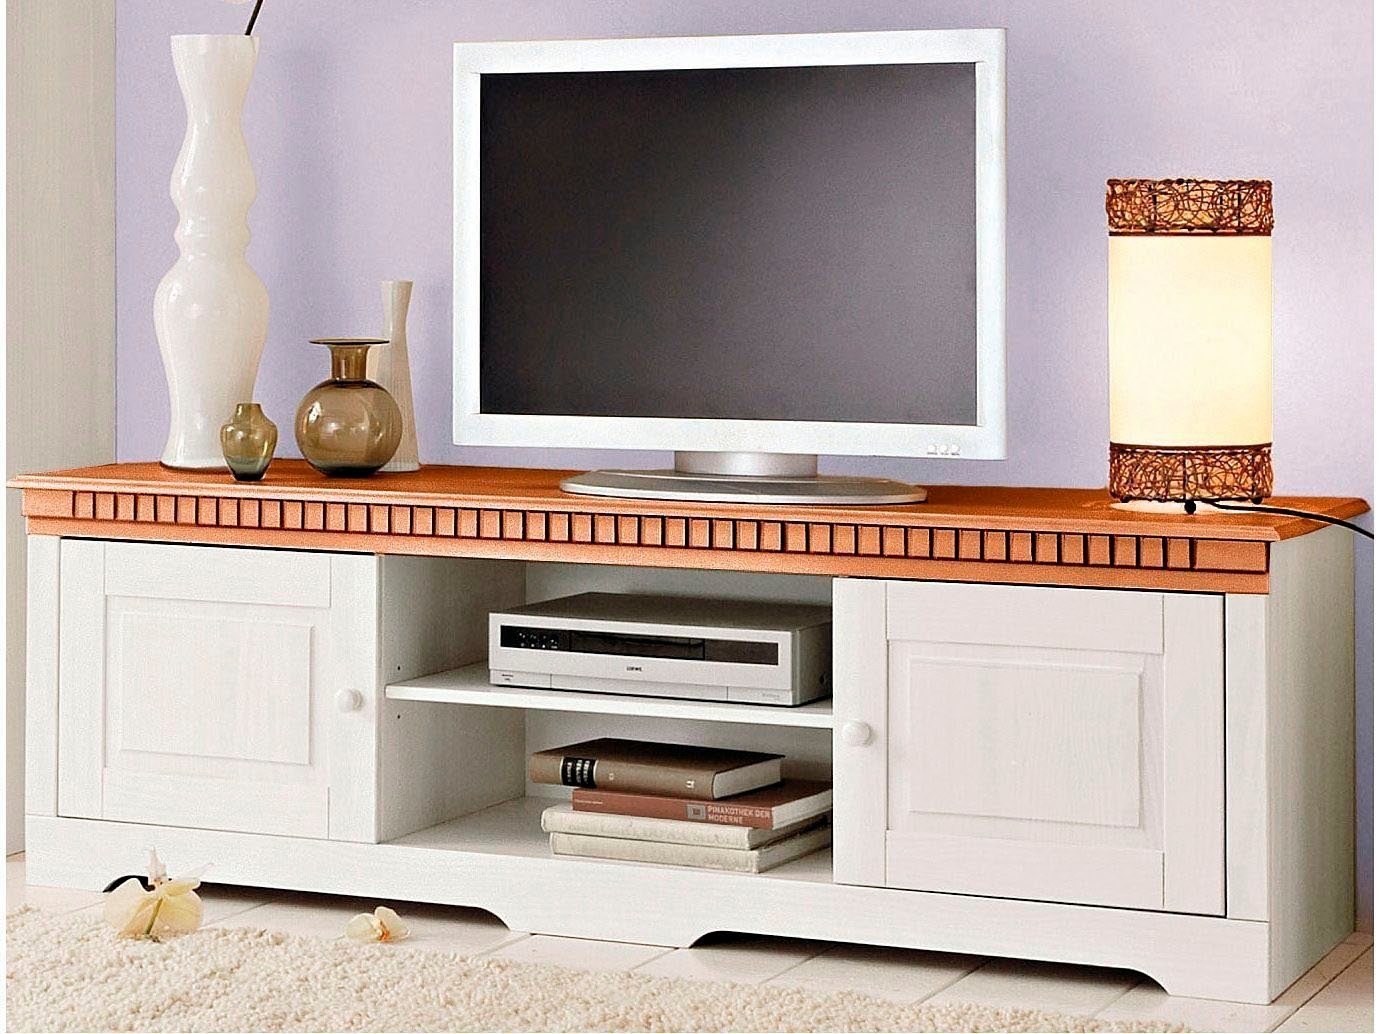 Home affaire Tv-meubel Lisa van mooi massief grenenhout, breedte 175 cm